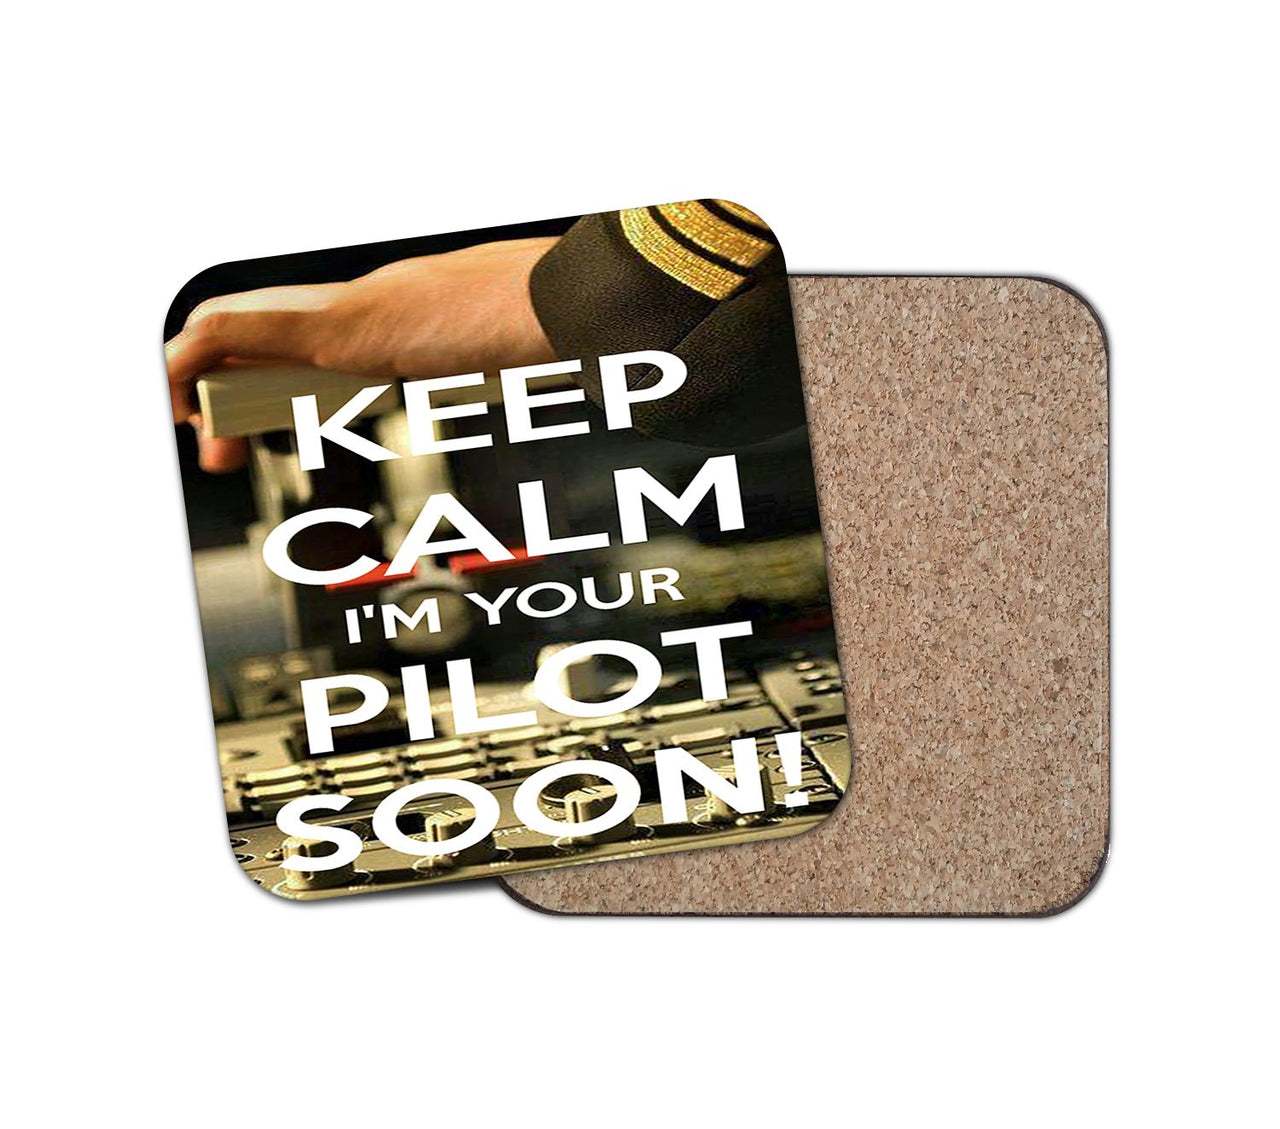 Keep Calm I'm your Pilot Soon Designed Coasters